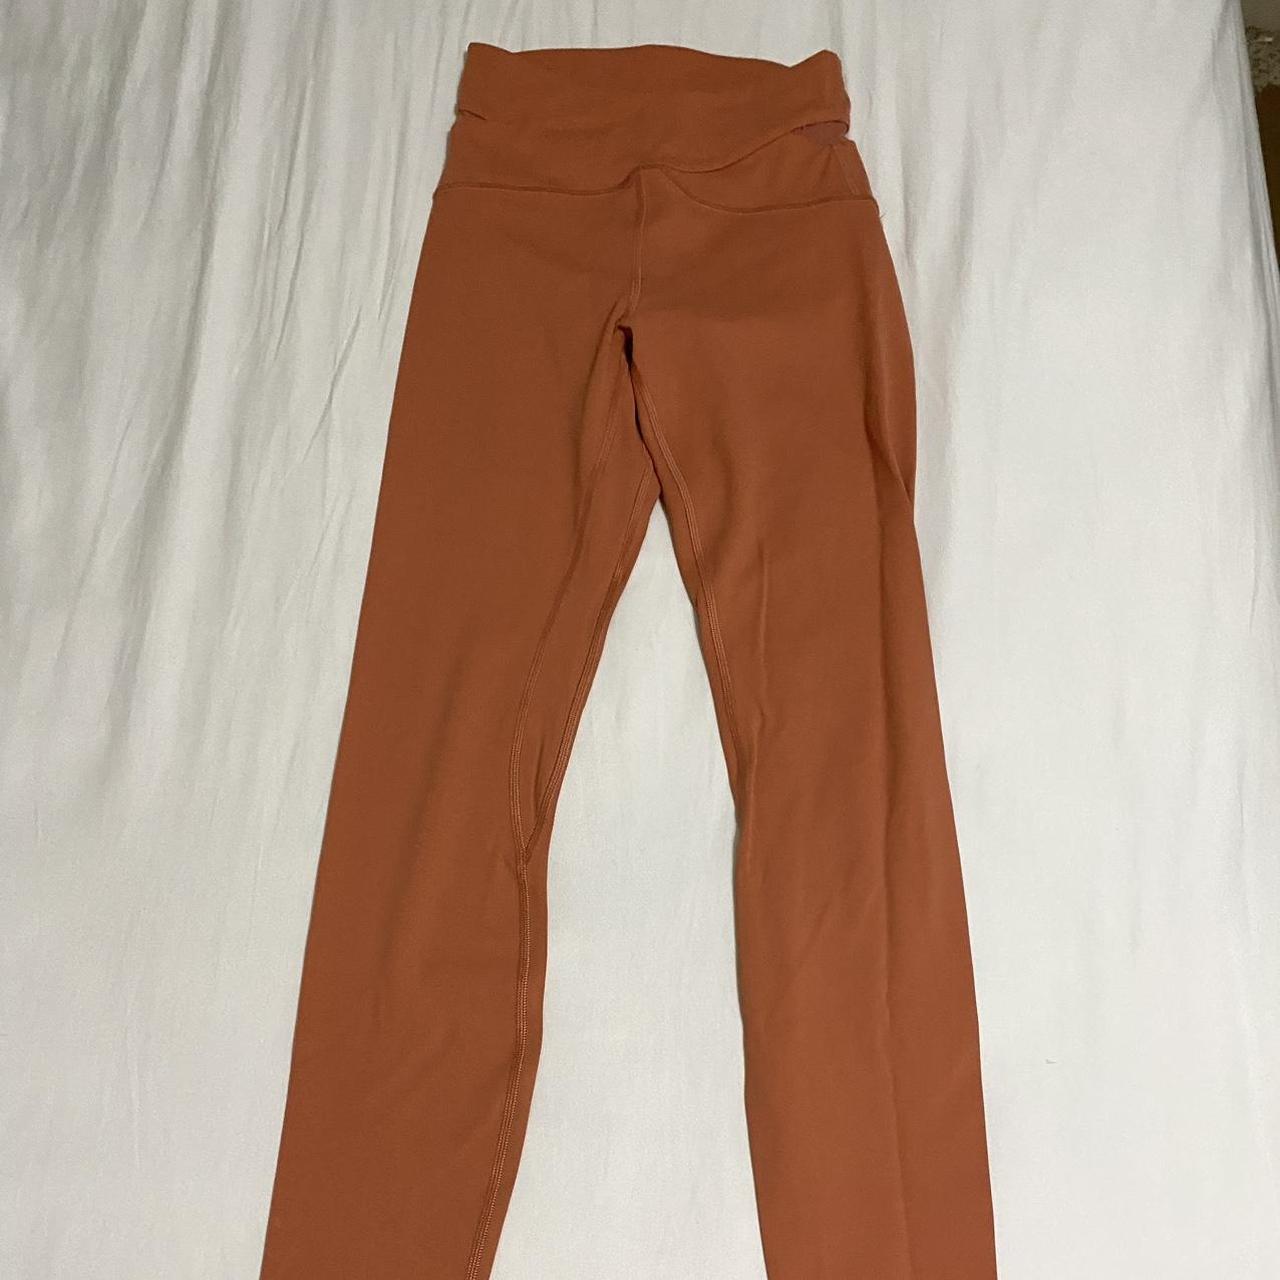 Lululemon leggings burnt orange - Depop